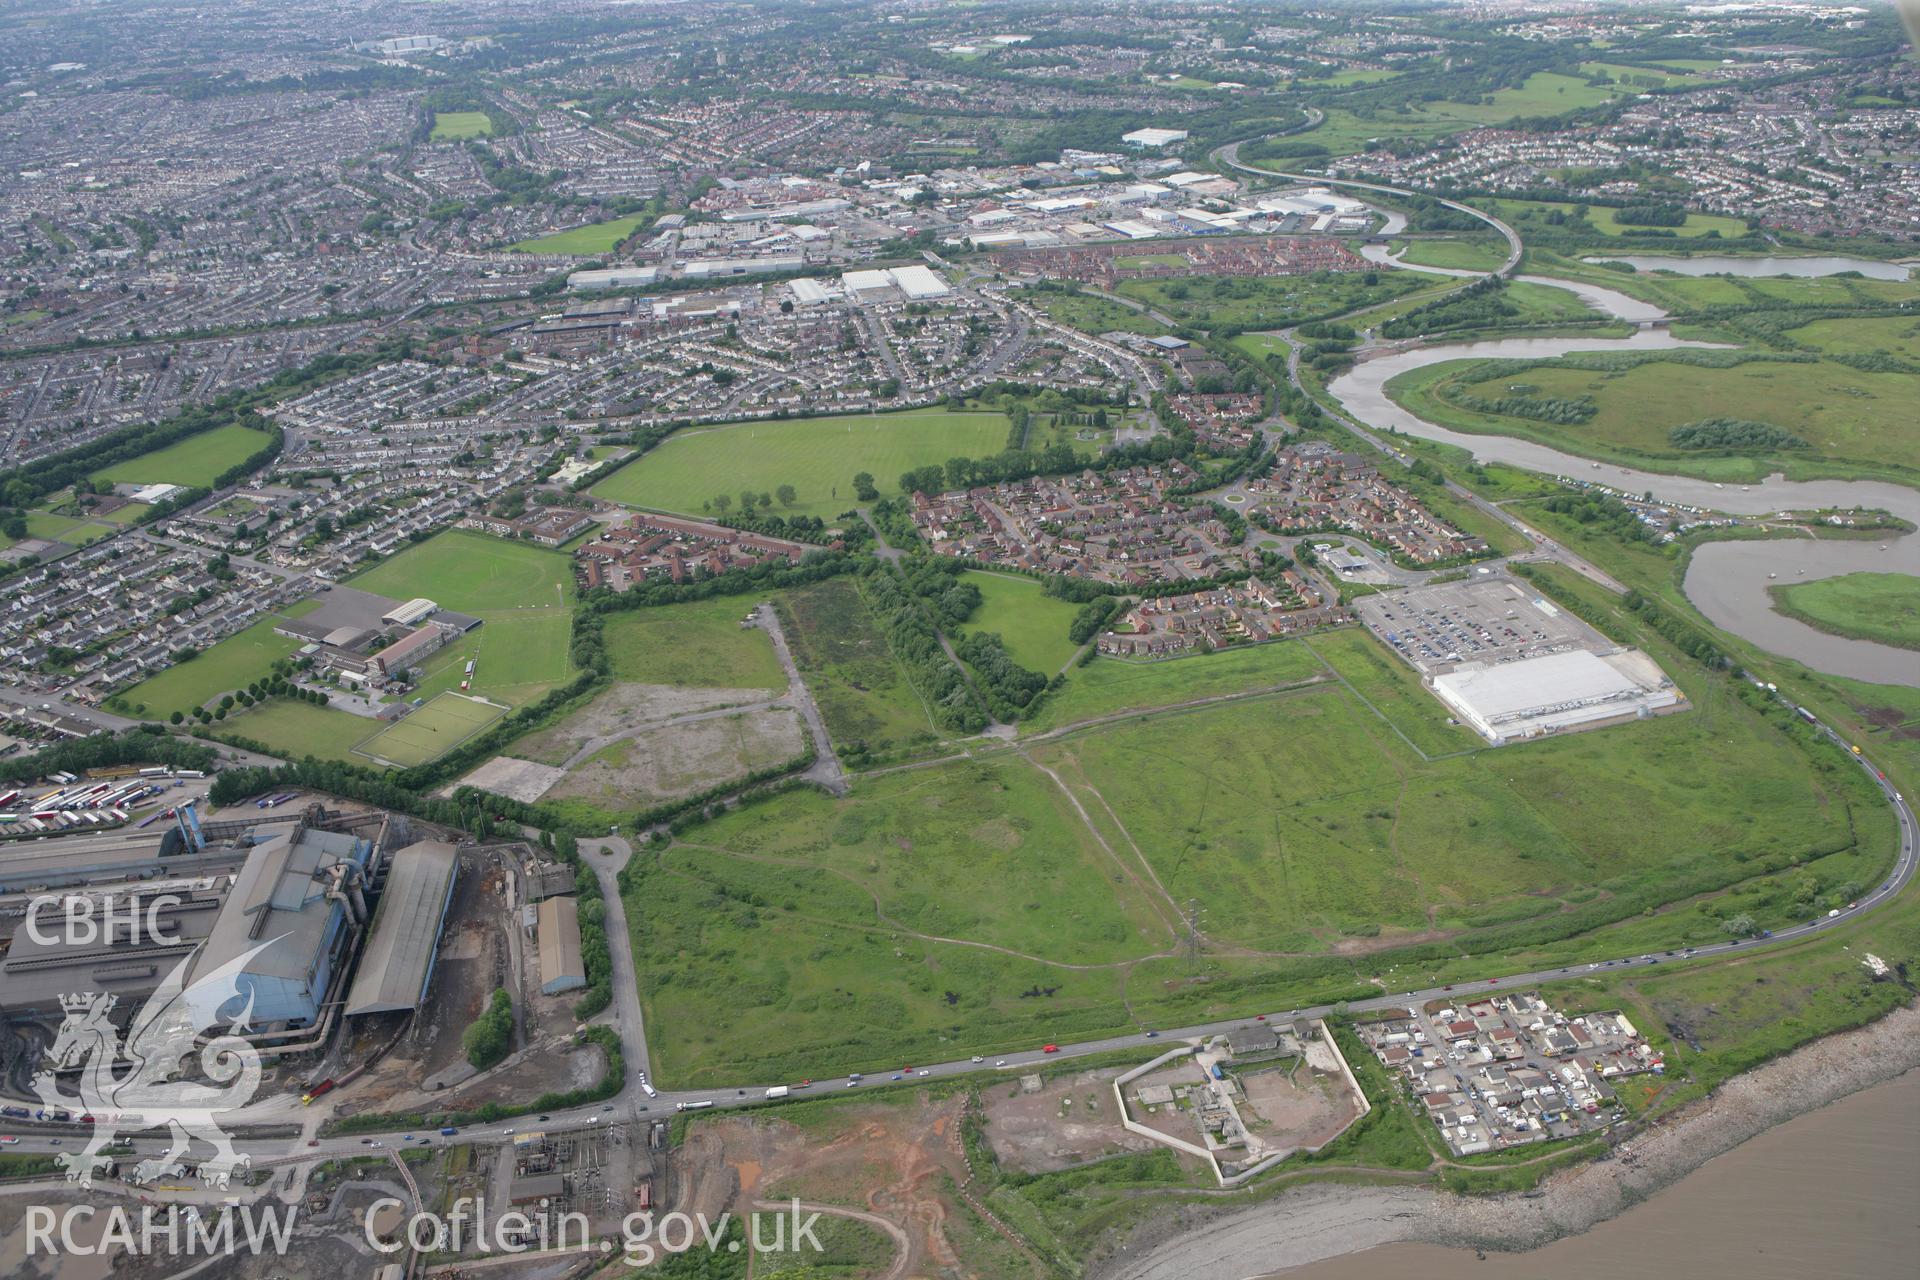 RCAHMW colour oblique photograph of Splott aerodrome. Taken by Toby Driver on 13/06/2011.